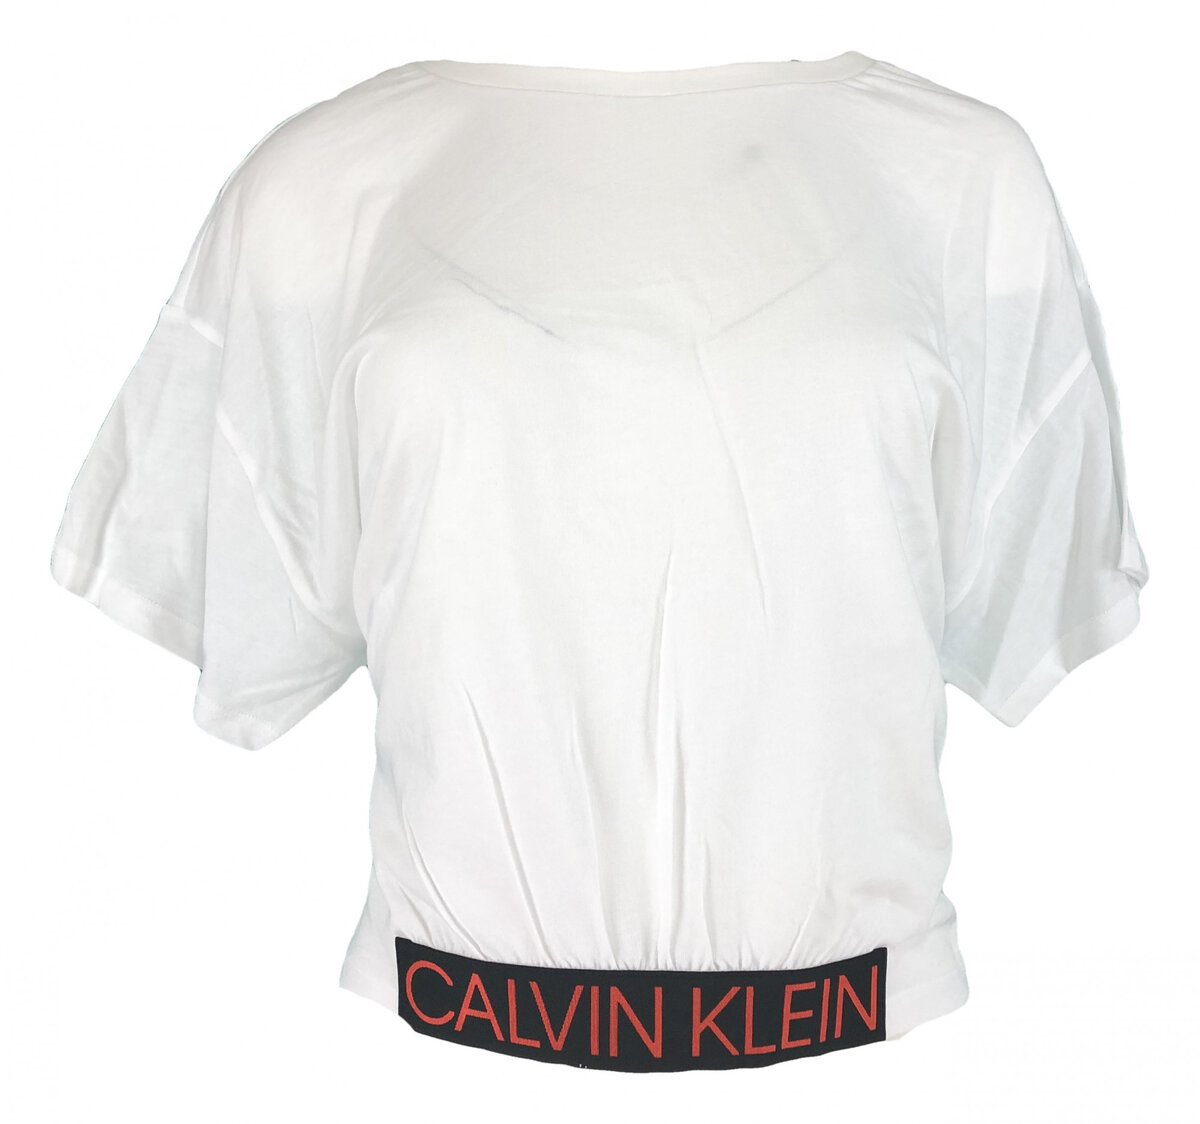 Dámské triko s krátkým rukávem 99J33 bílá - Calvin Klein, bílá s potiskem L i10_P35941_1:823_2:90_